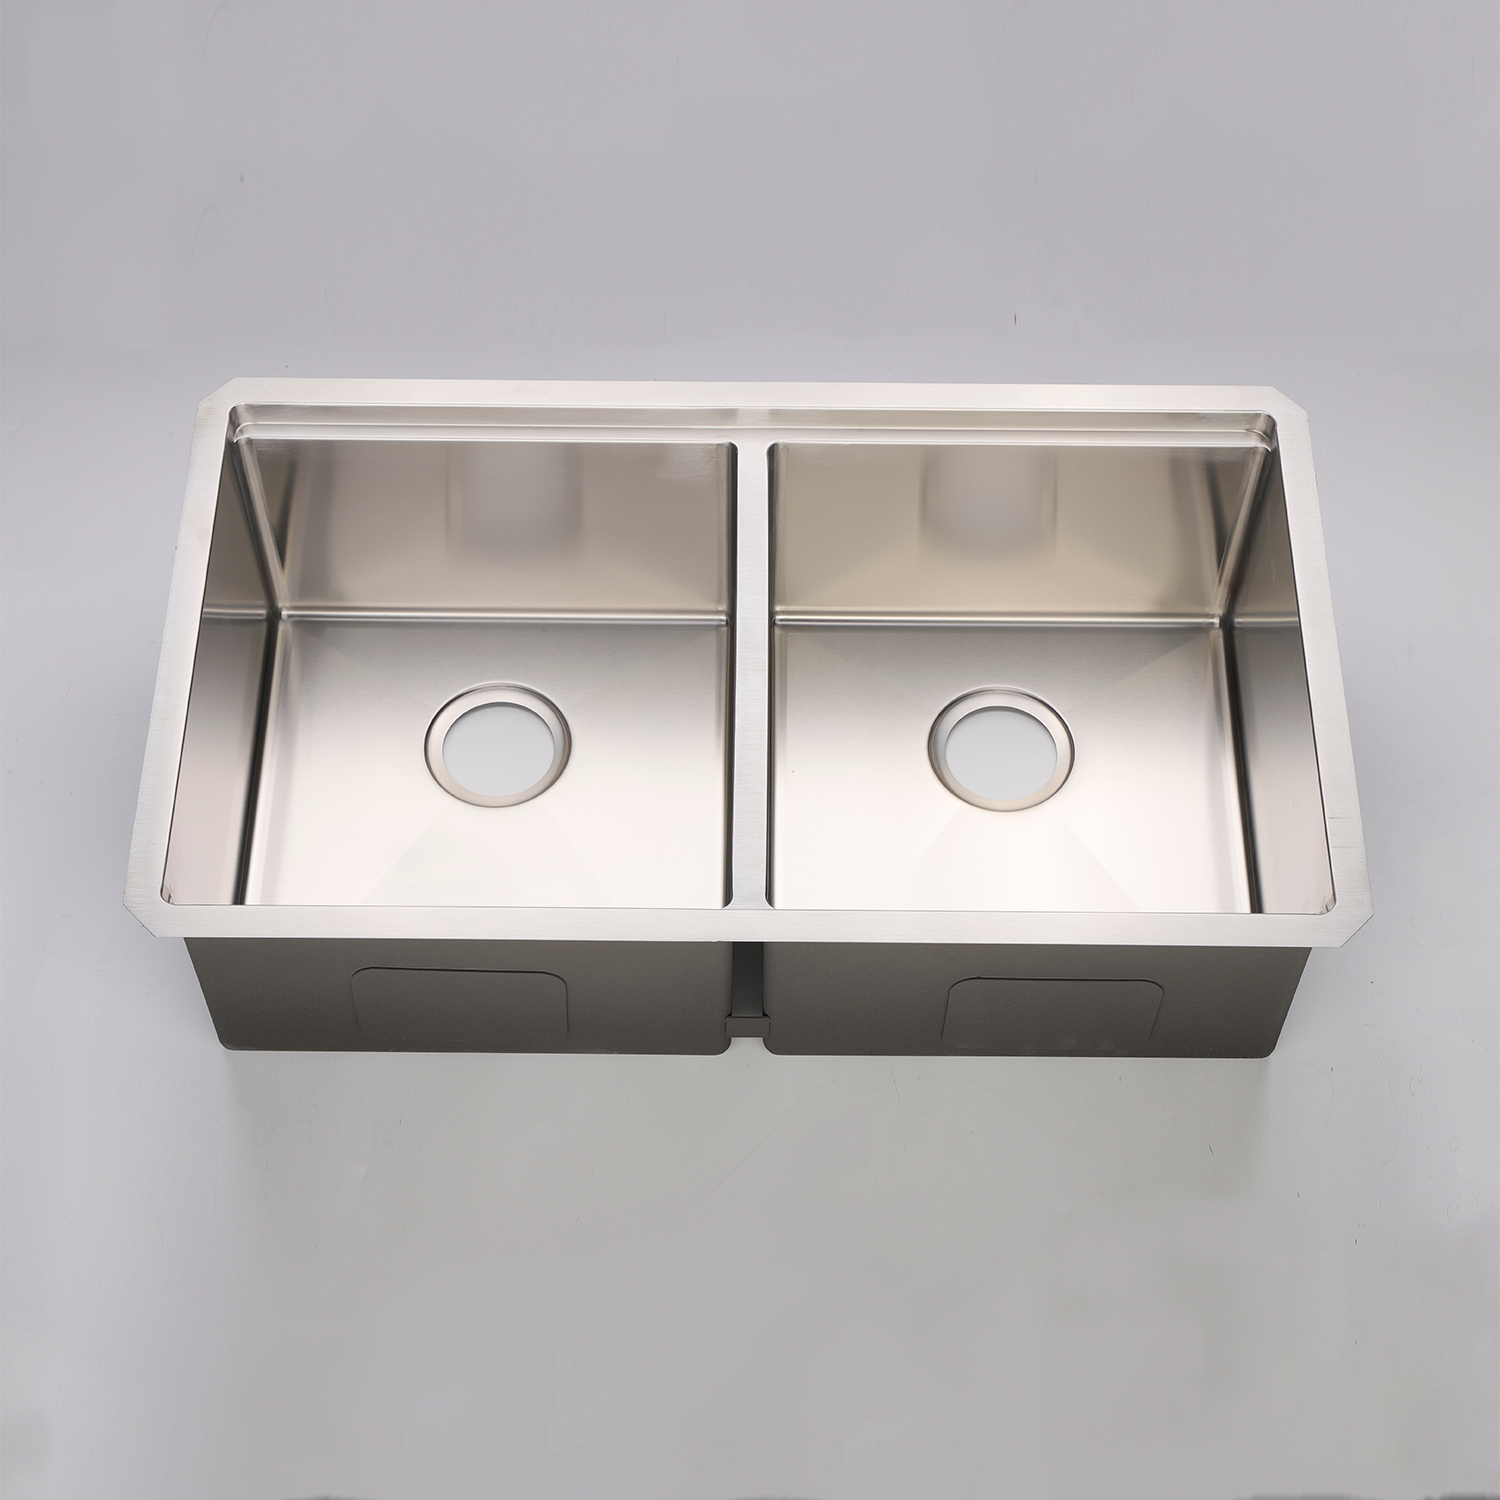 DAX Workstation Double Bowl Undermount Kitchen Sink 32" x 19" - R10 - 18G. Accessories Included